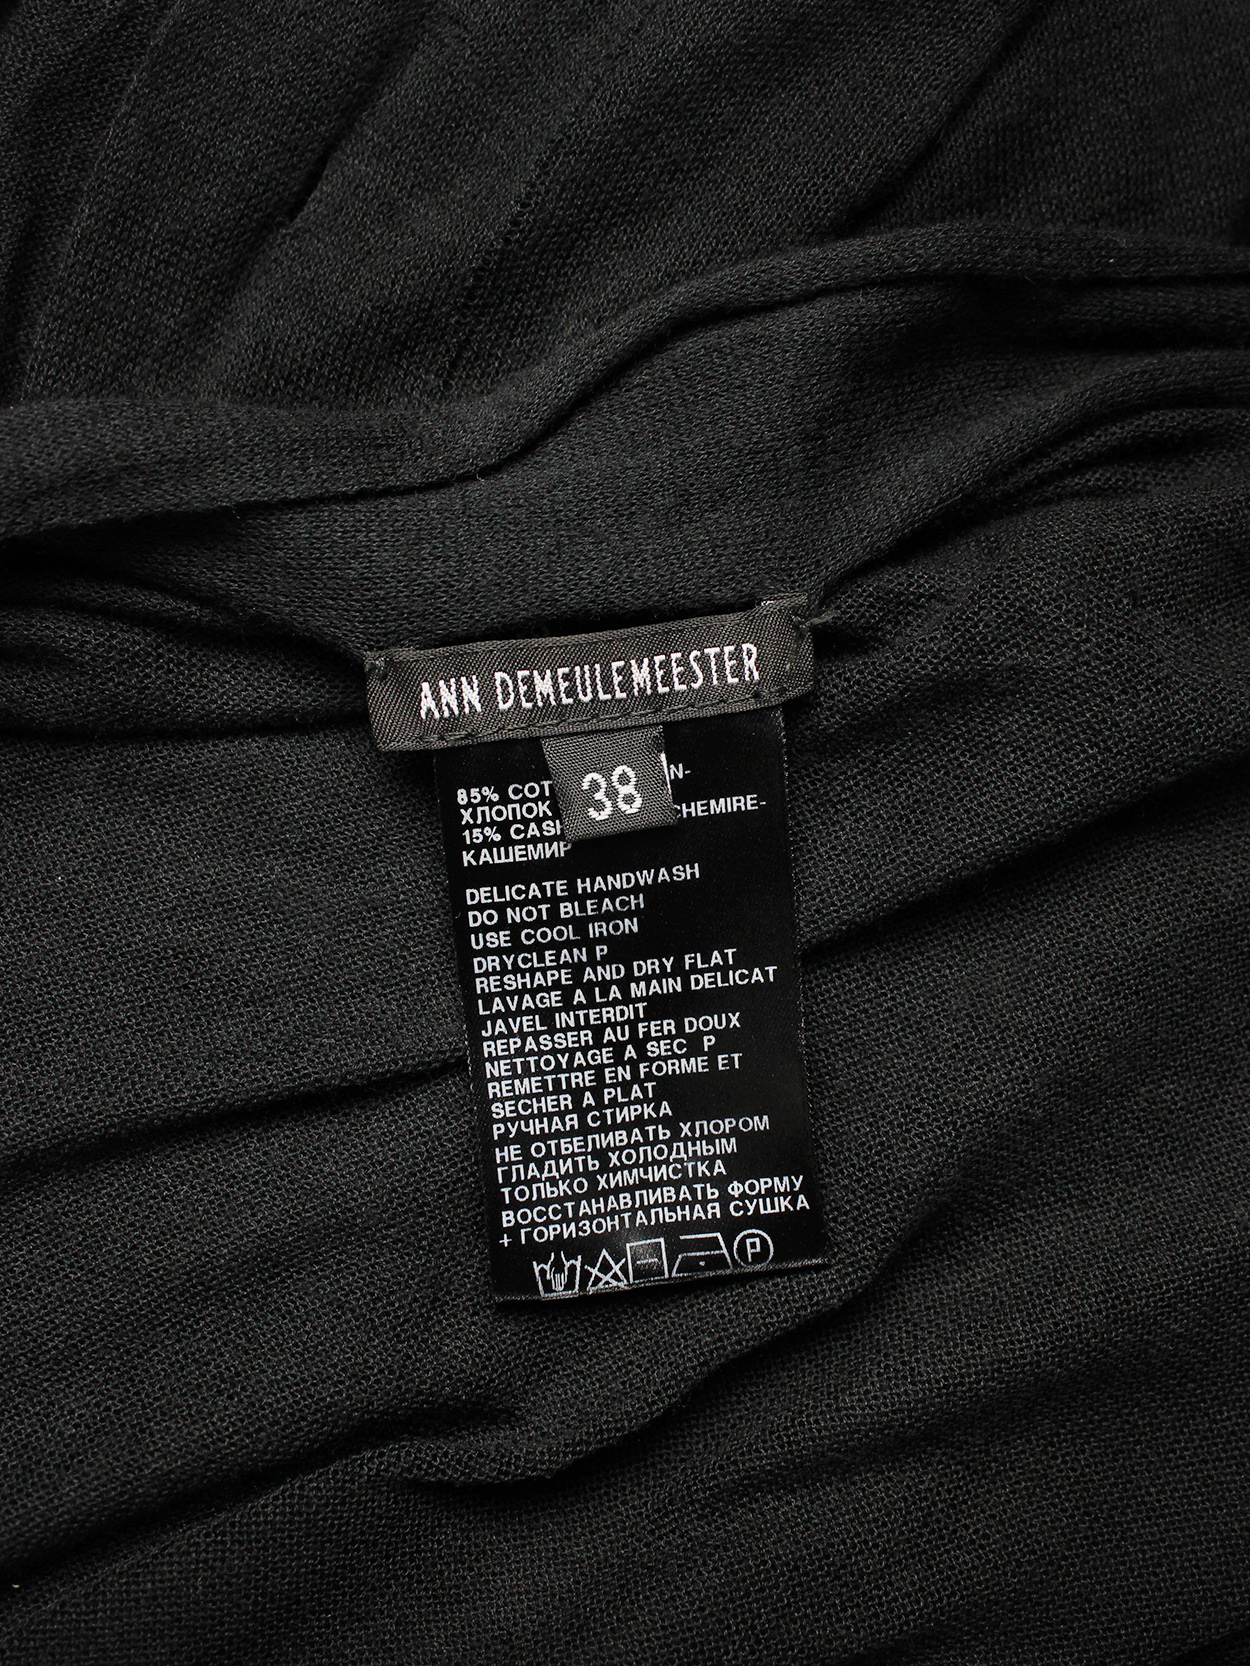 vaniitas Ann Demeulemeester black convertible scarf with buttons (14)